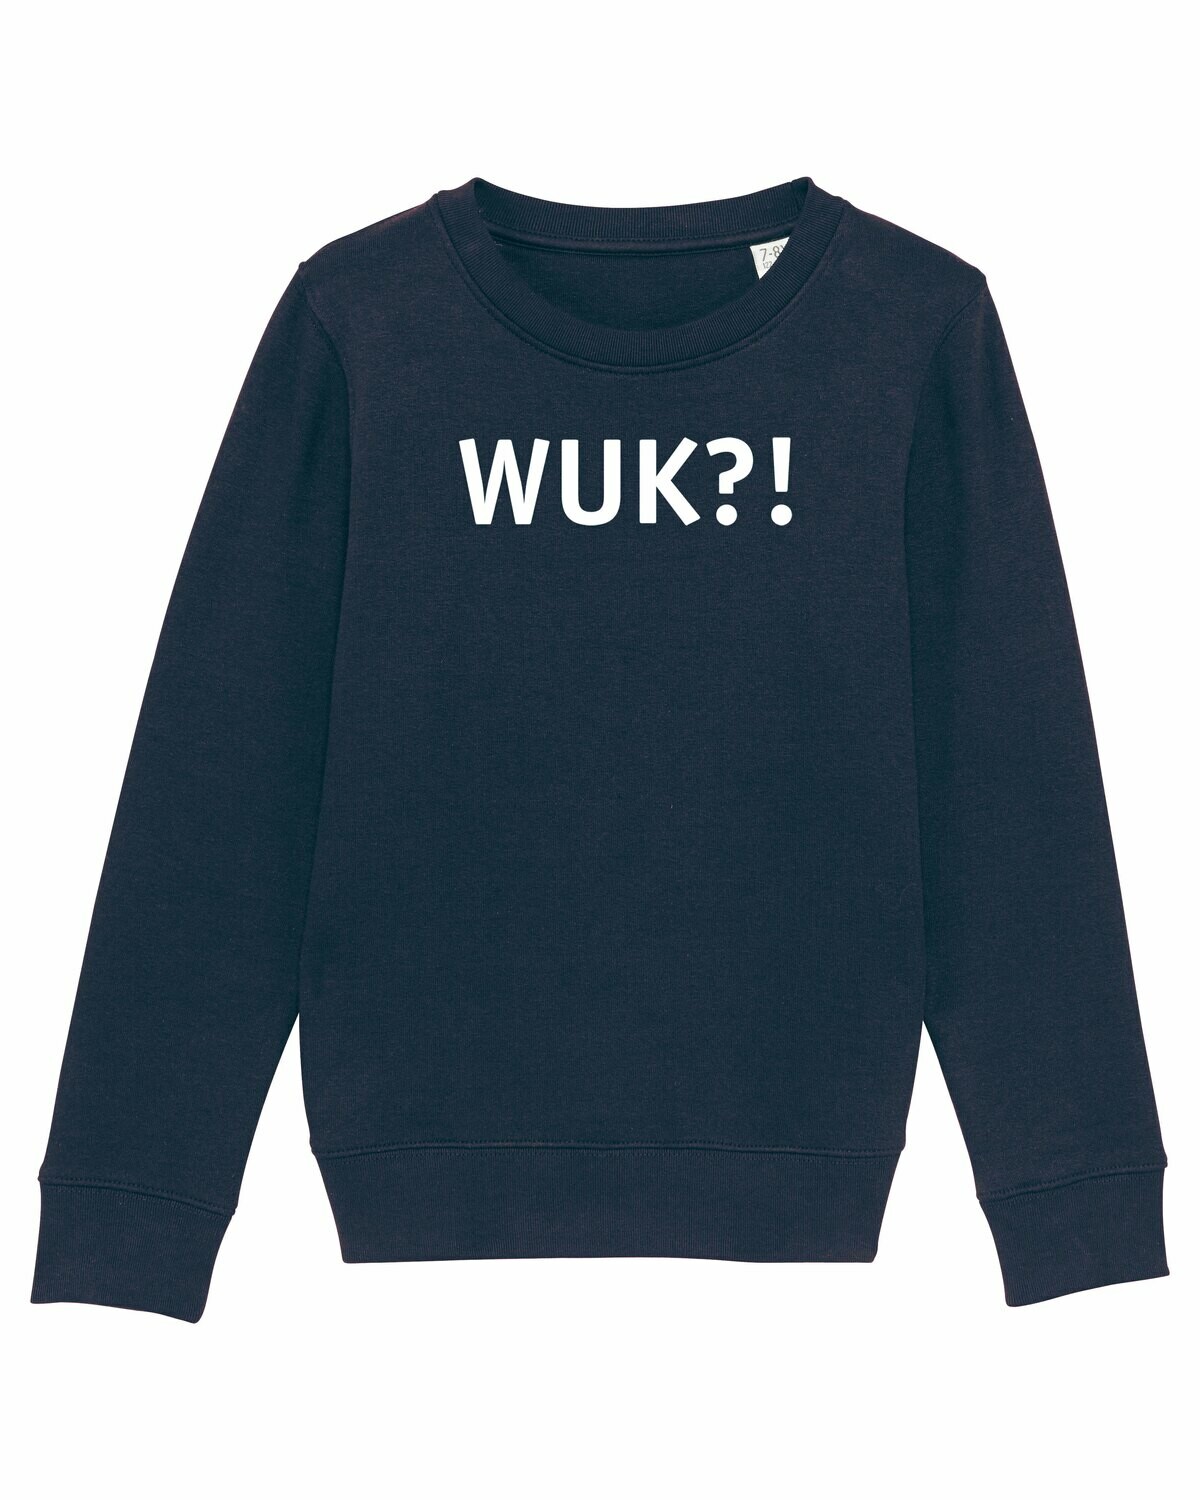 Kids Sweater Wuk ?!